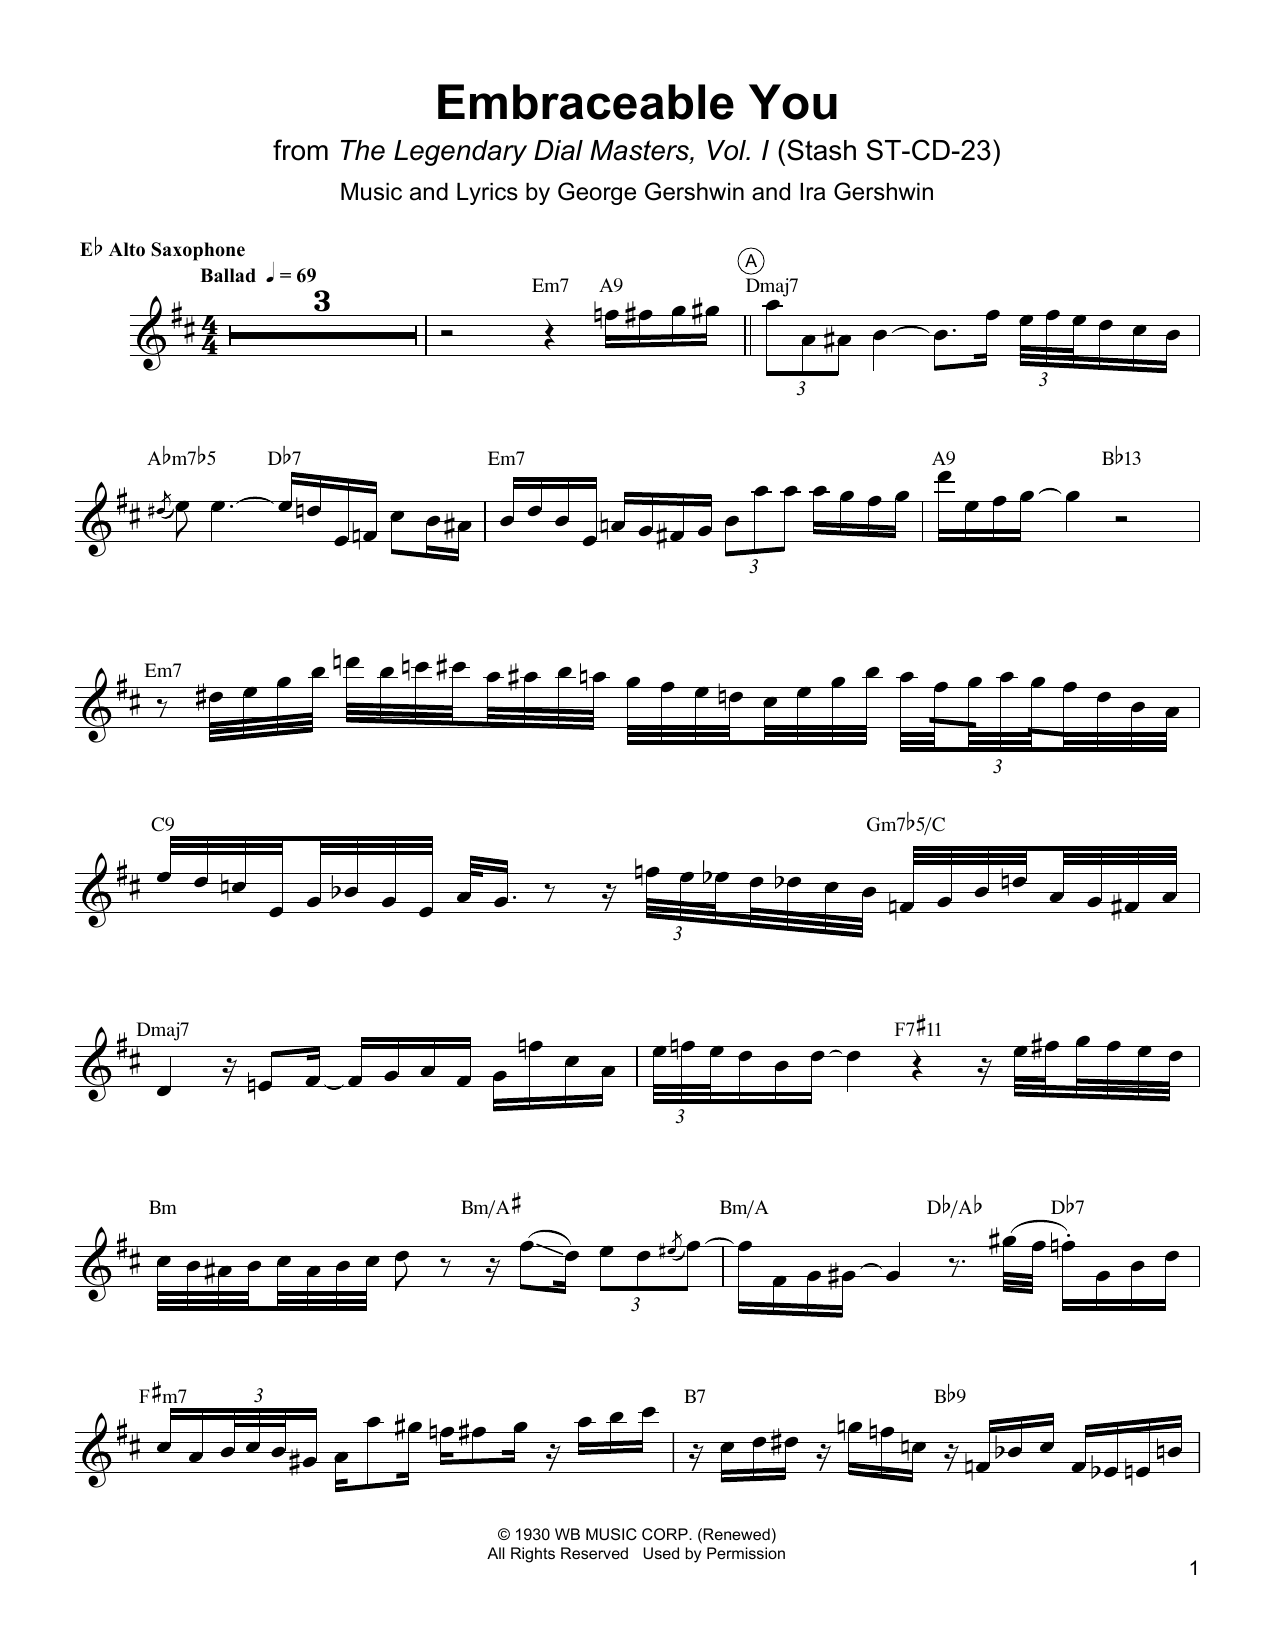 Charlie Parker Embraceable You Sheet Music Notes & Chords for Alto Sax Transcription - Download or Print PDF